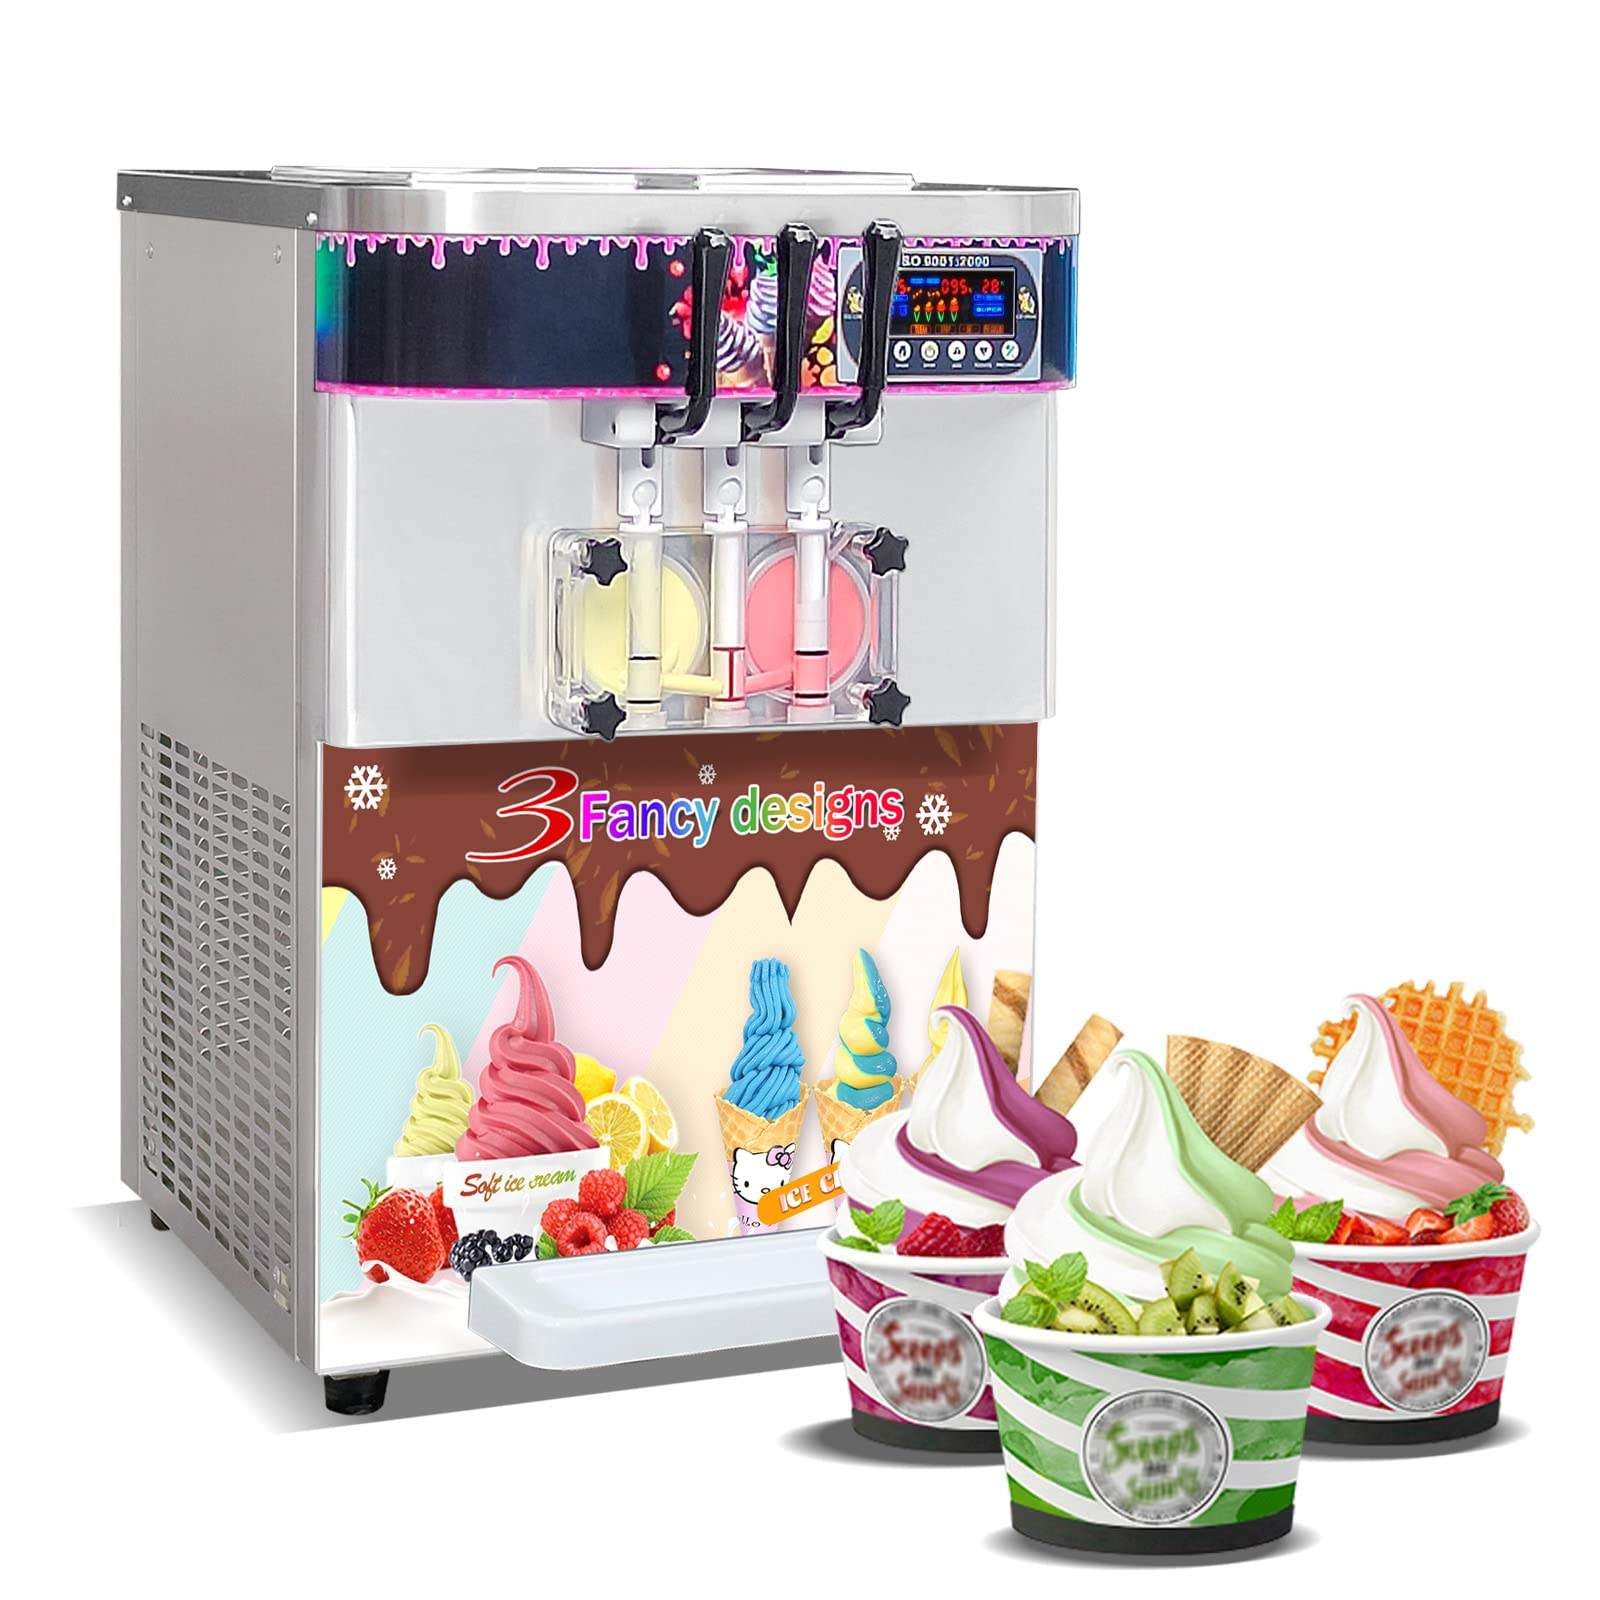 ETL NSF CE RoHS Certificate Approval 3 Flavors Commercial Automatic Vending Frozen Yogurt Soft Serve Ice Cream Machine - Soft Ice Cream Machine - 1